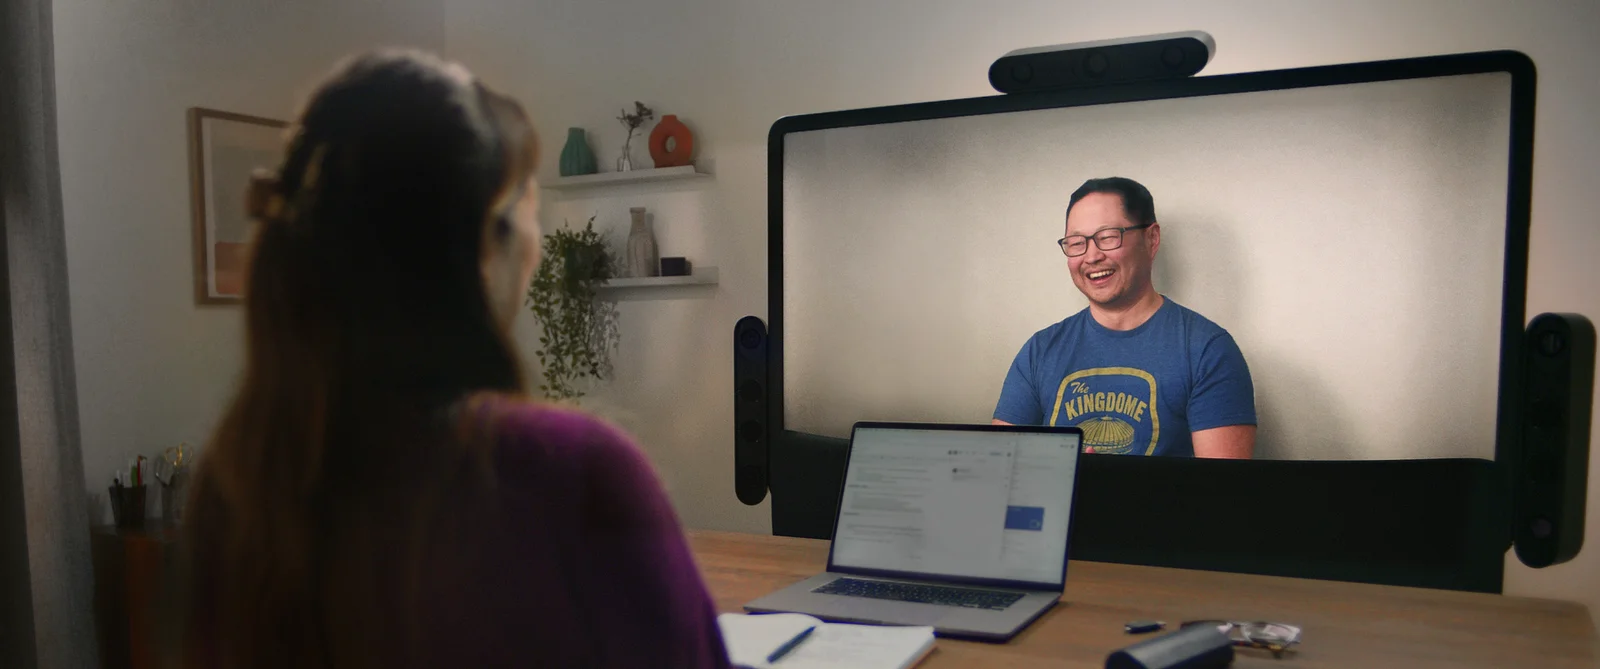 Two people interacting via screen using Google proejct Starlight